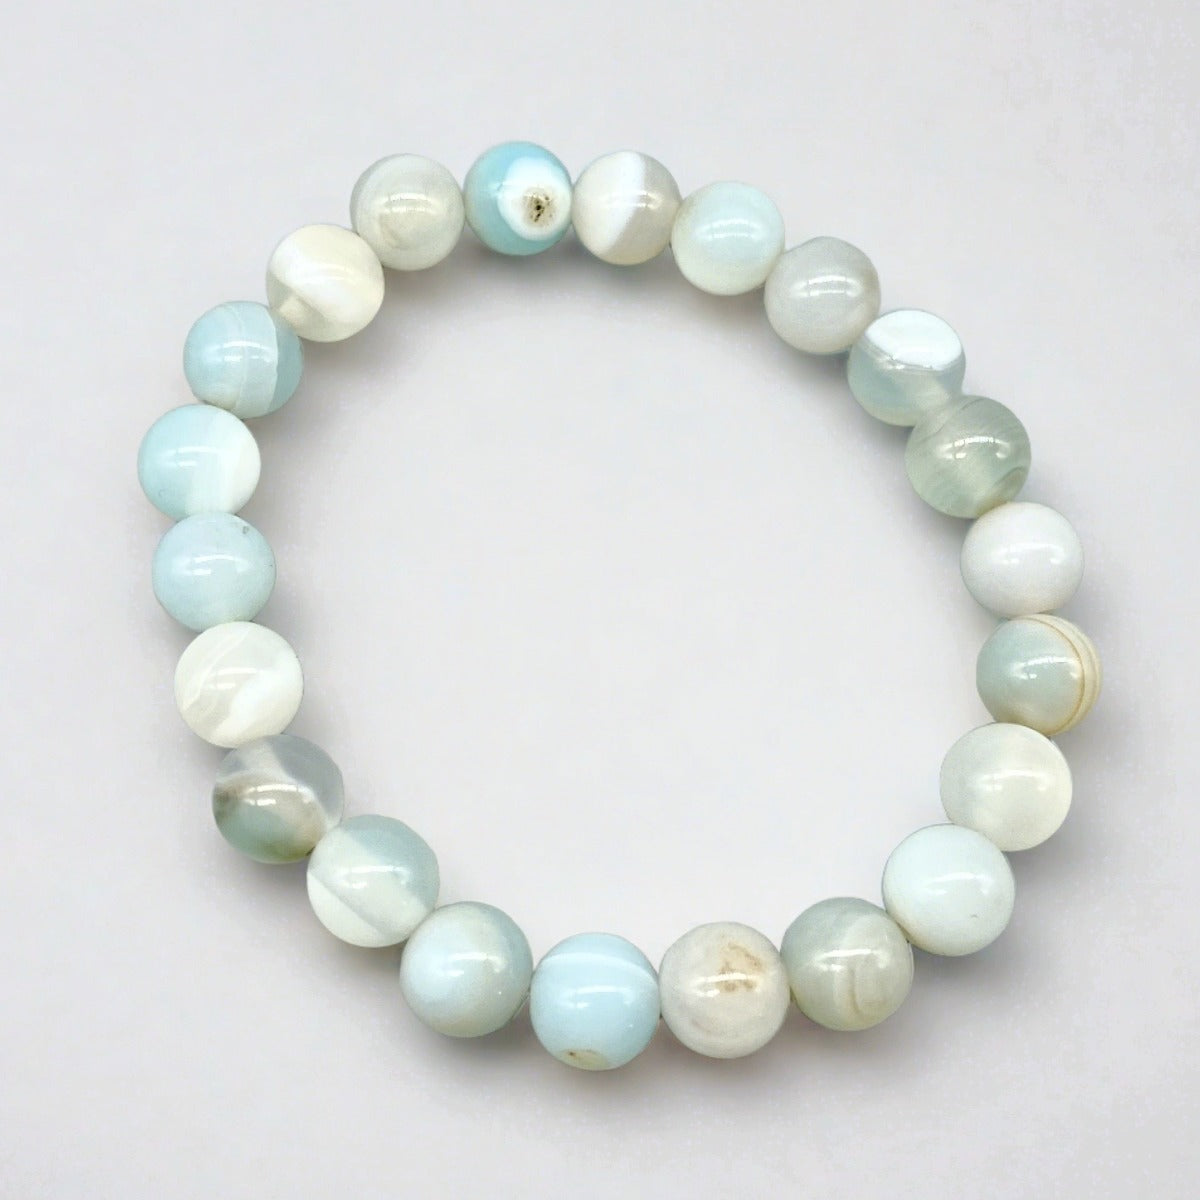 Stretch cord bracelet featuring arctic blue agate gemstones